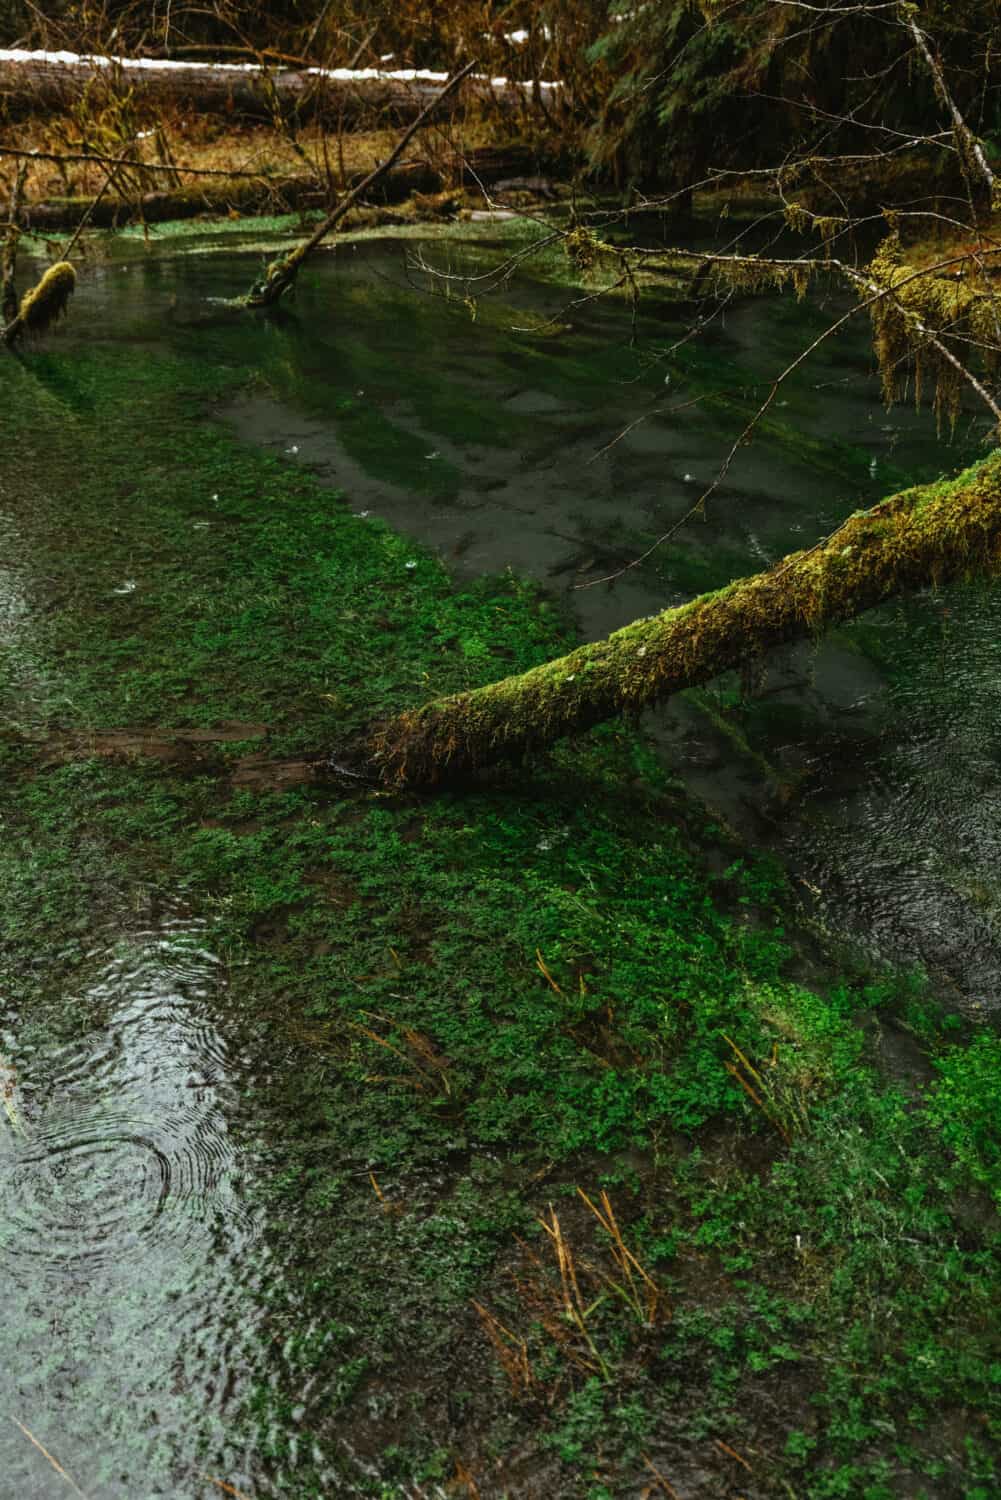 Rainy creek at the Hoh Rainforest in Washington